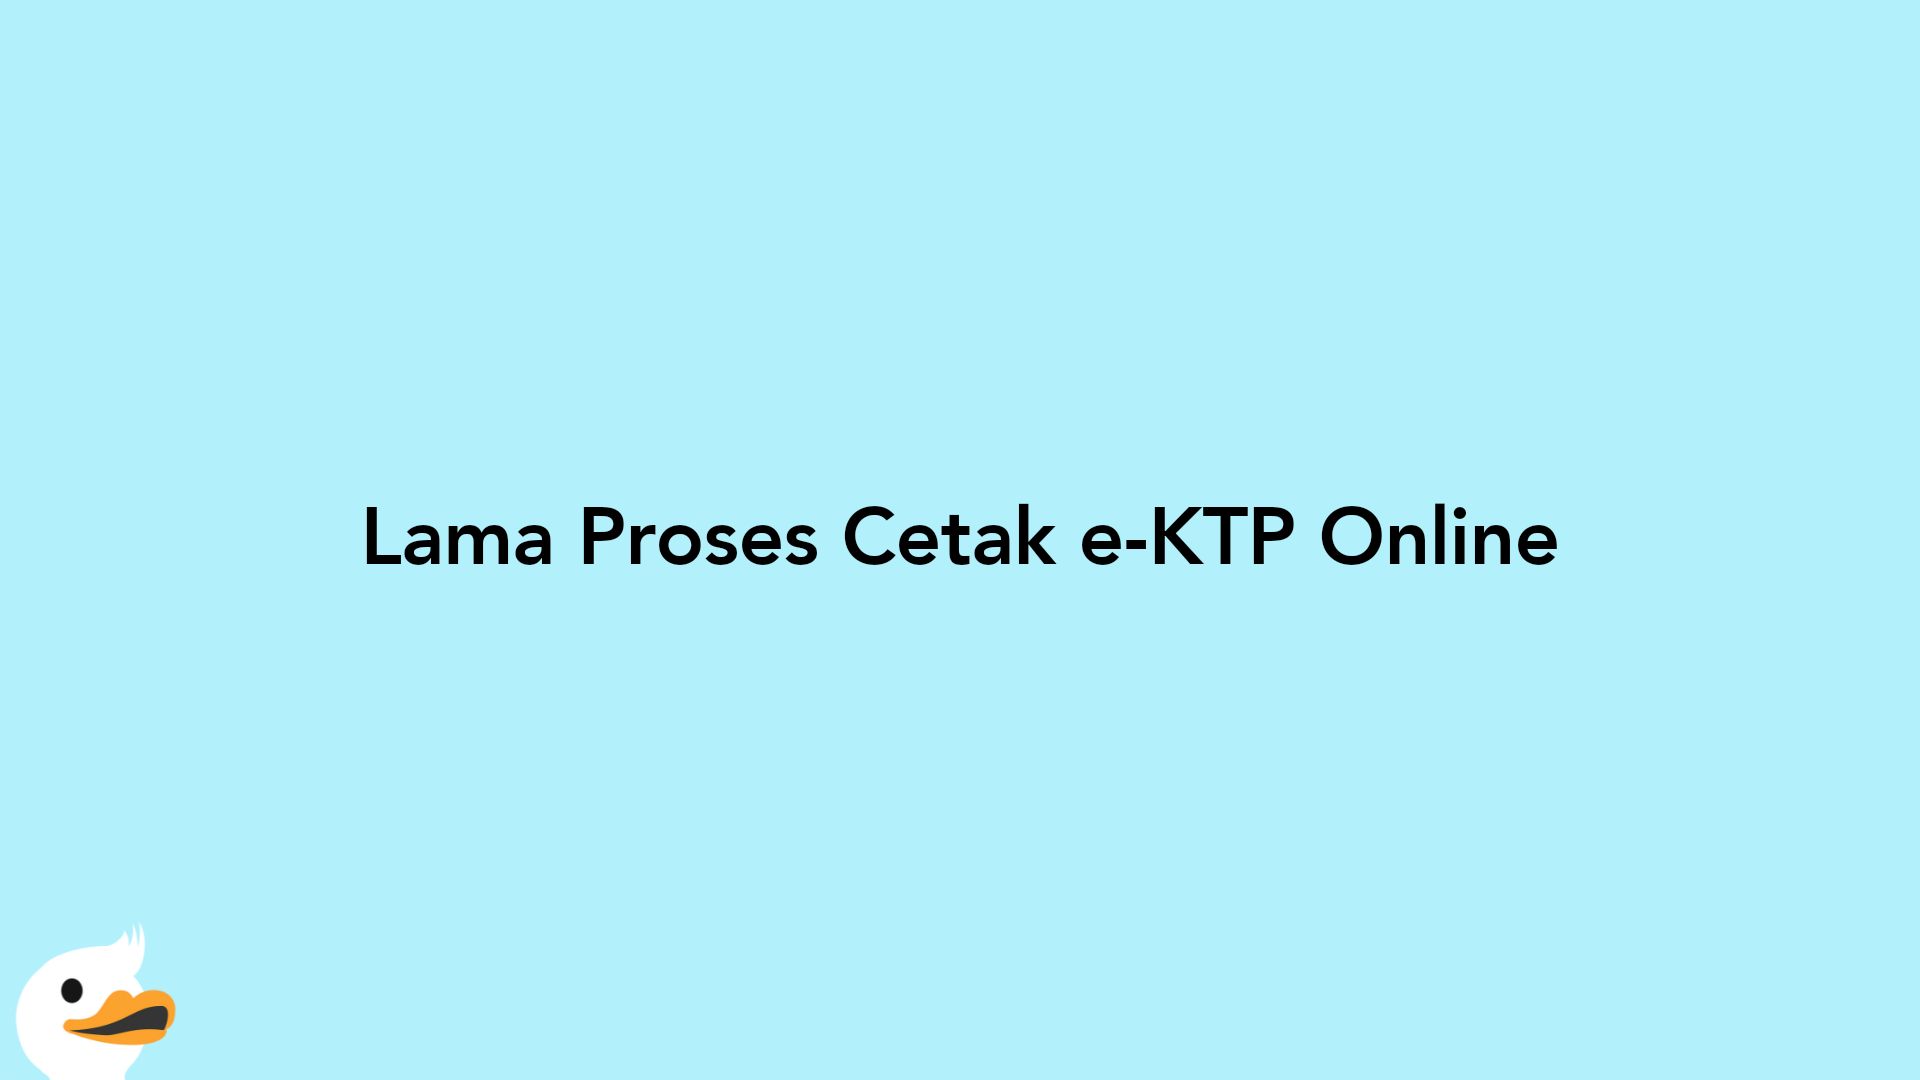 Lama Proses Cetak e-KTP Online